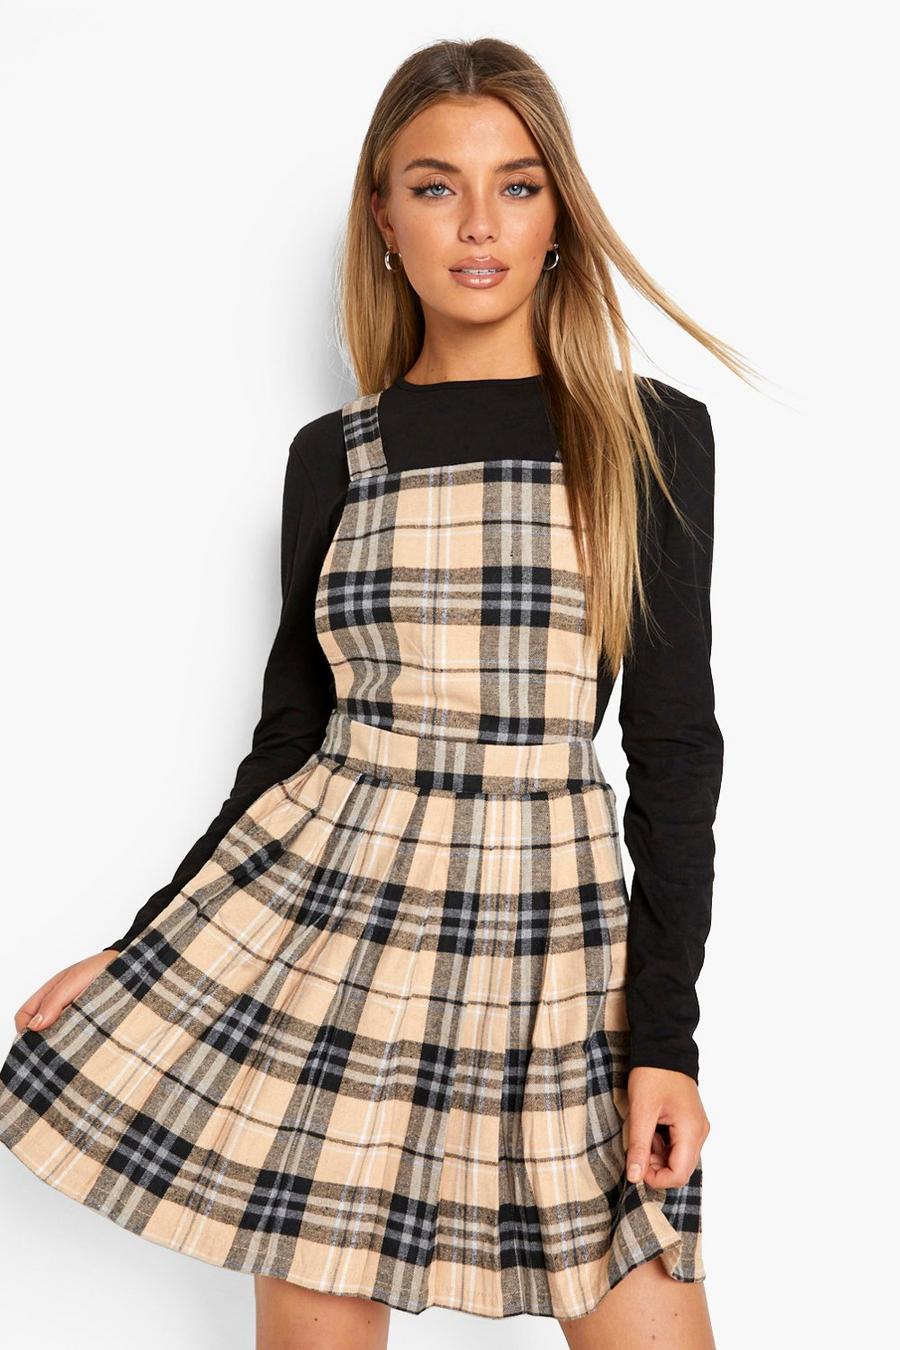 Tan brun Check Print Pleated Skirt Pinafore Dress